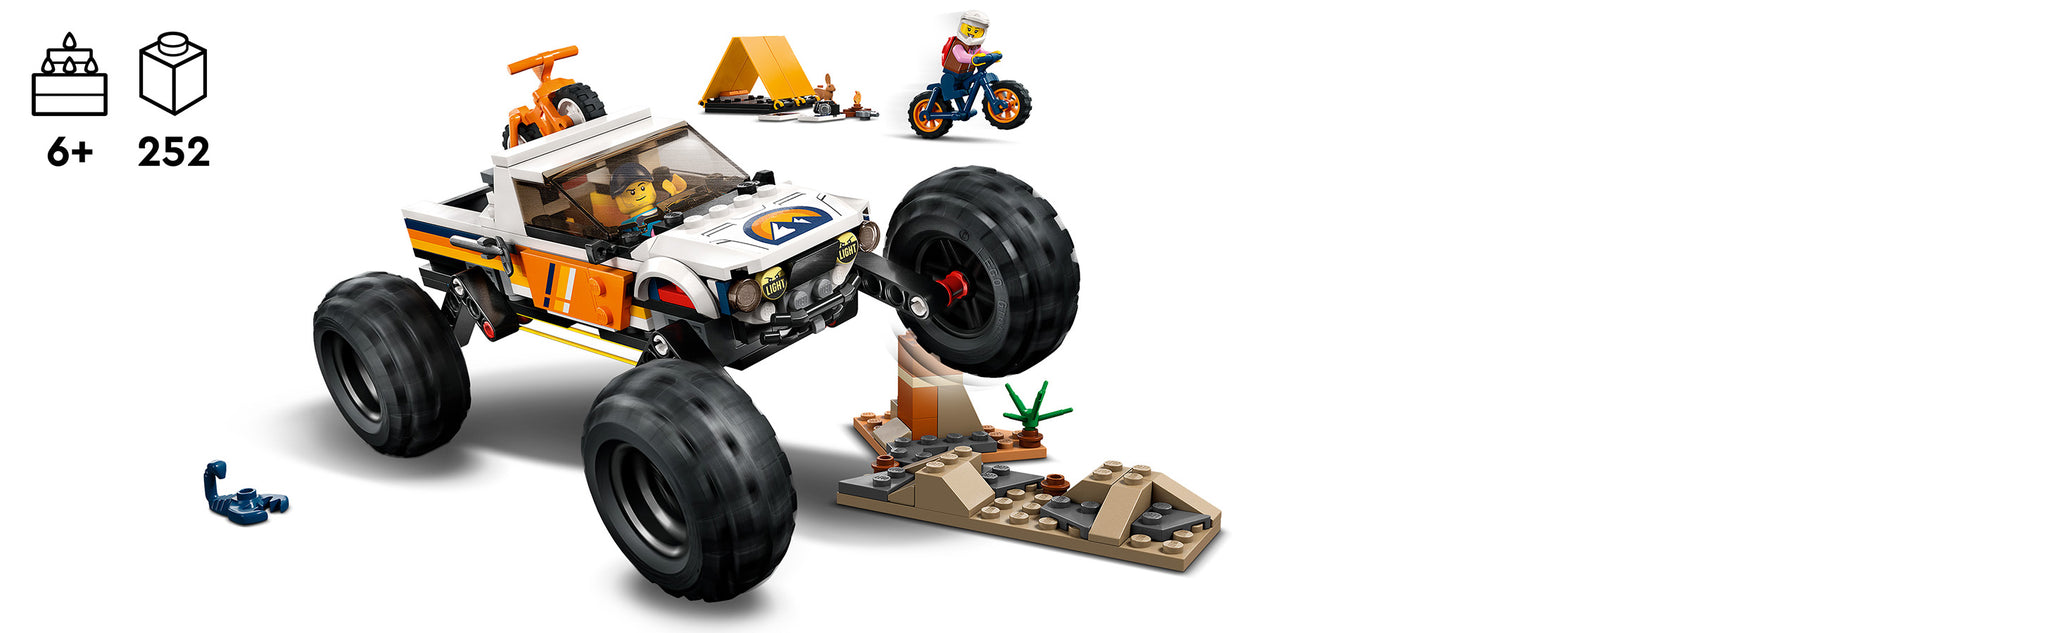 LEGO 60387 4x4 offroad-avonturen